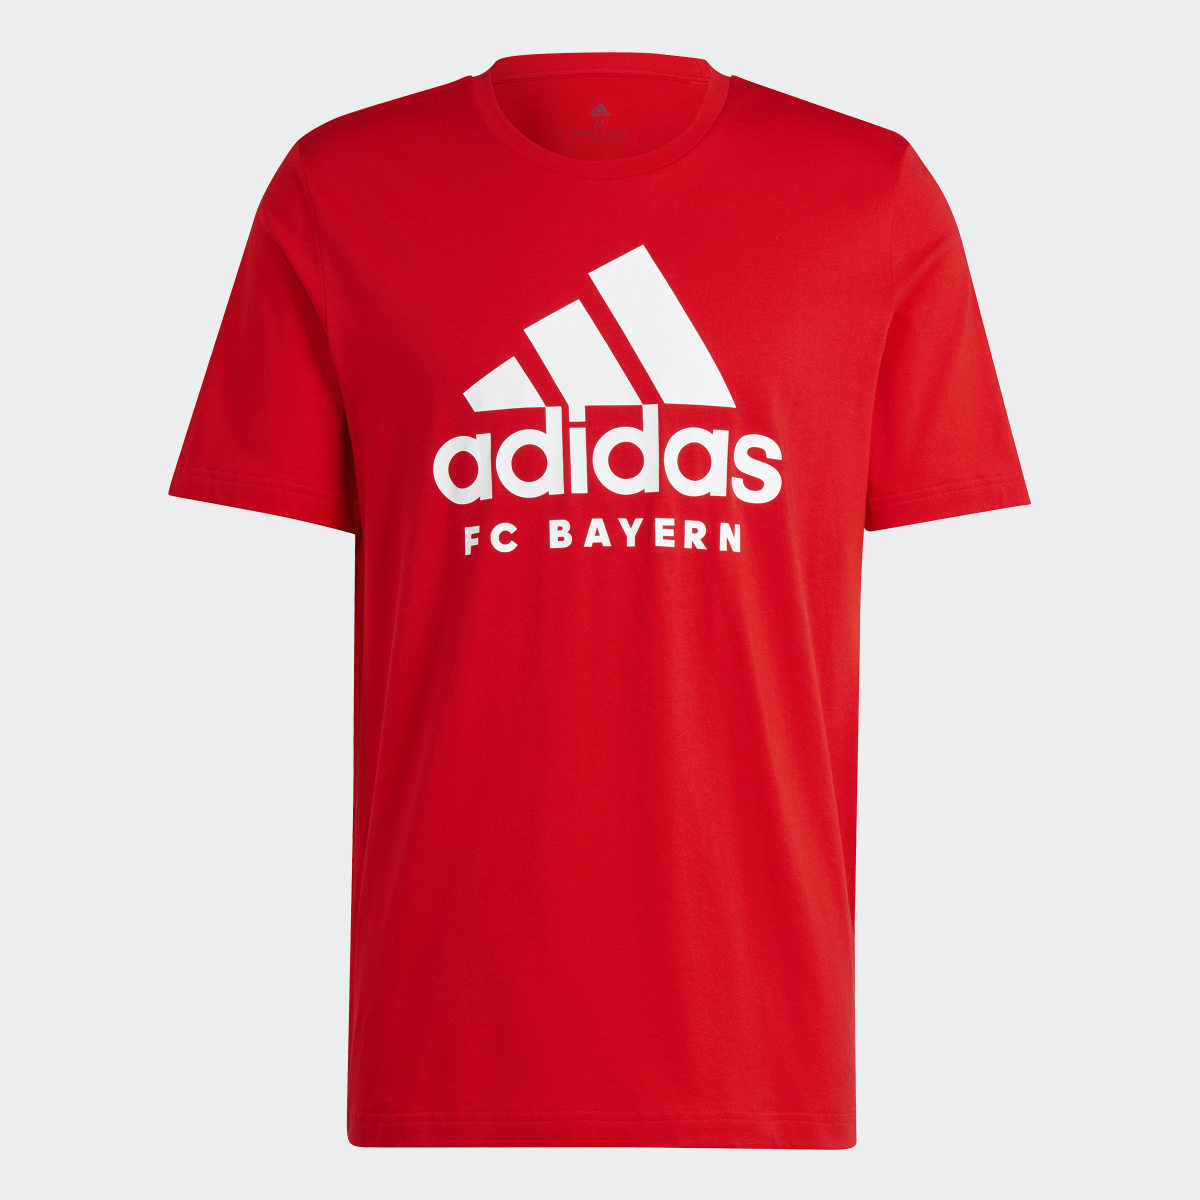 Adidas FC Bayern DNA Graphic T-Shirt. 5